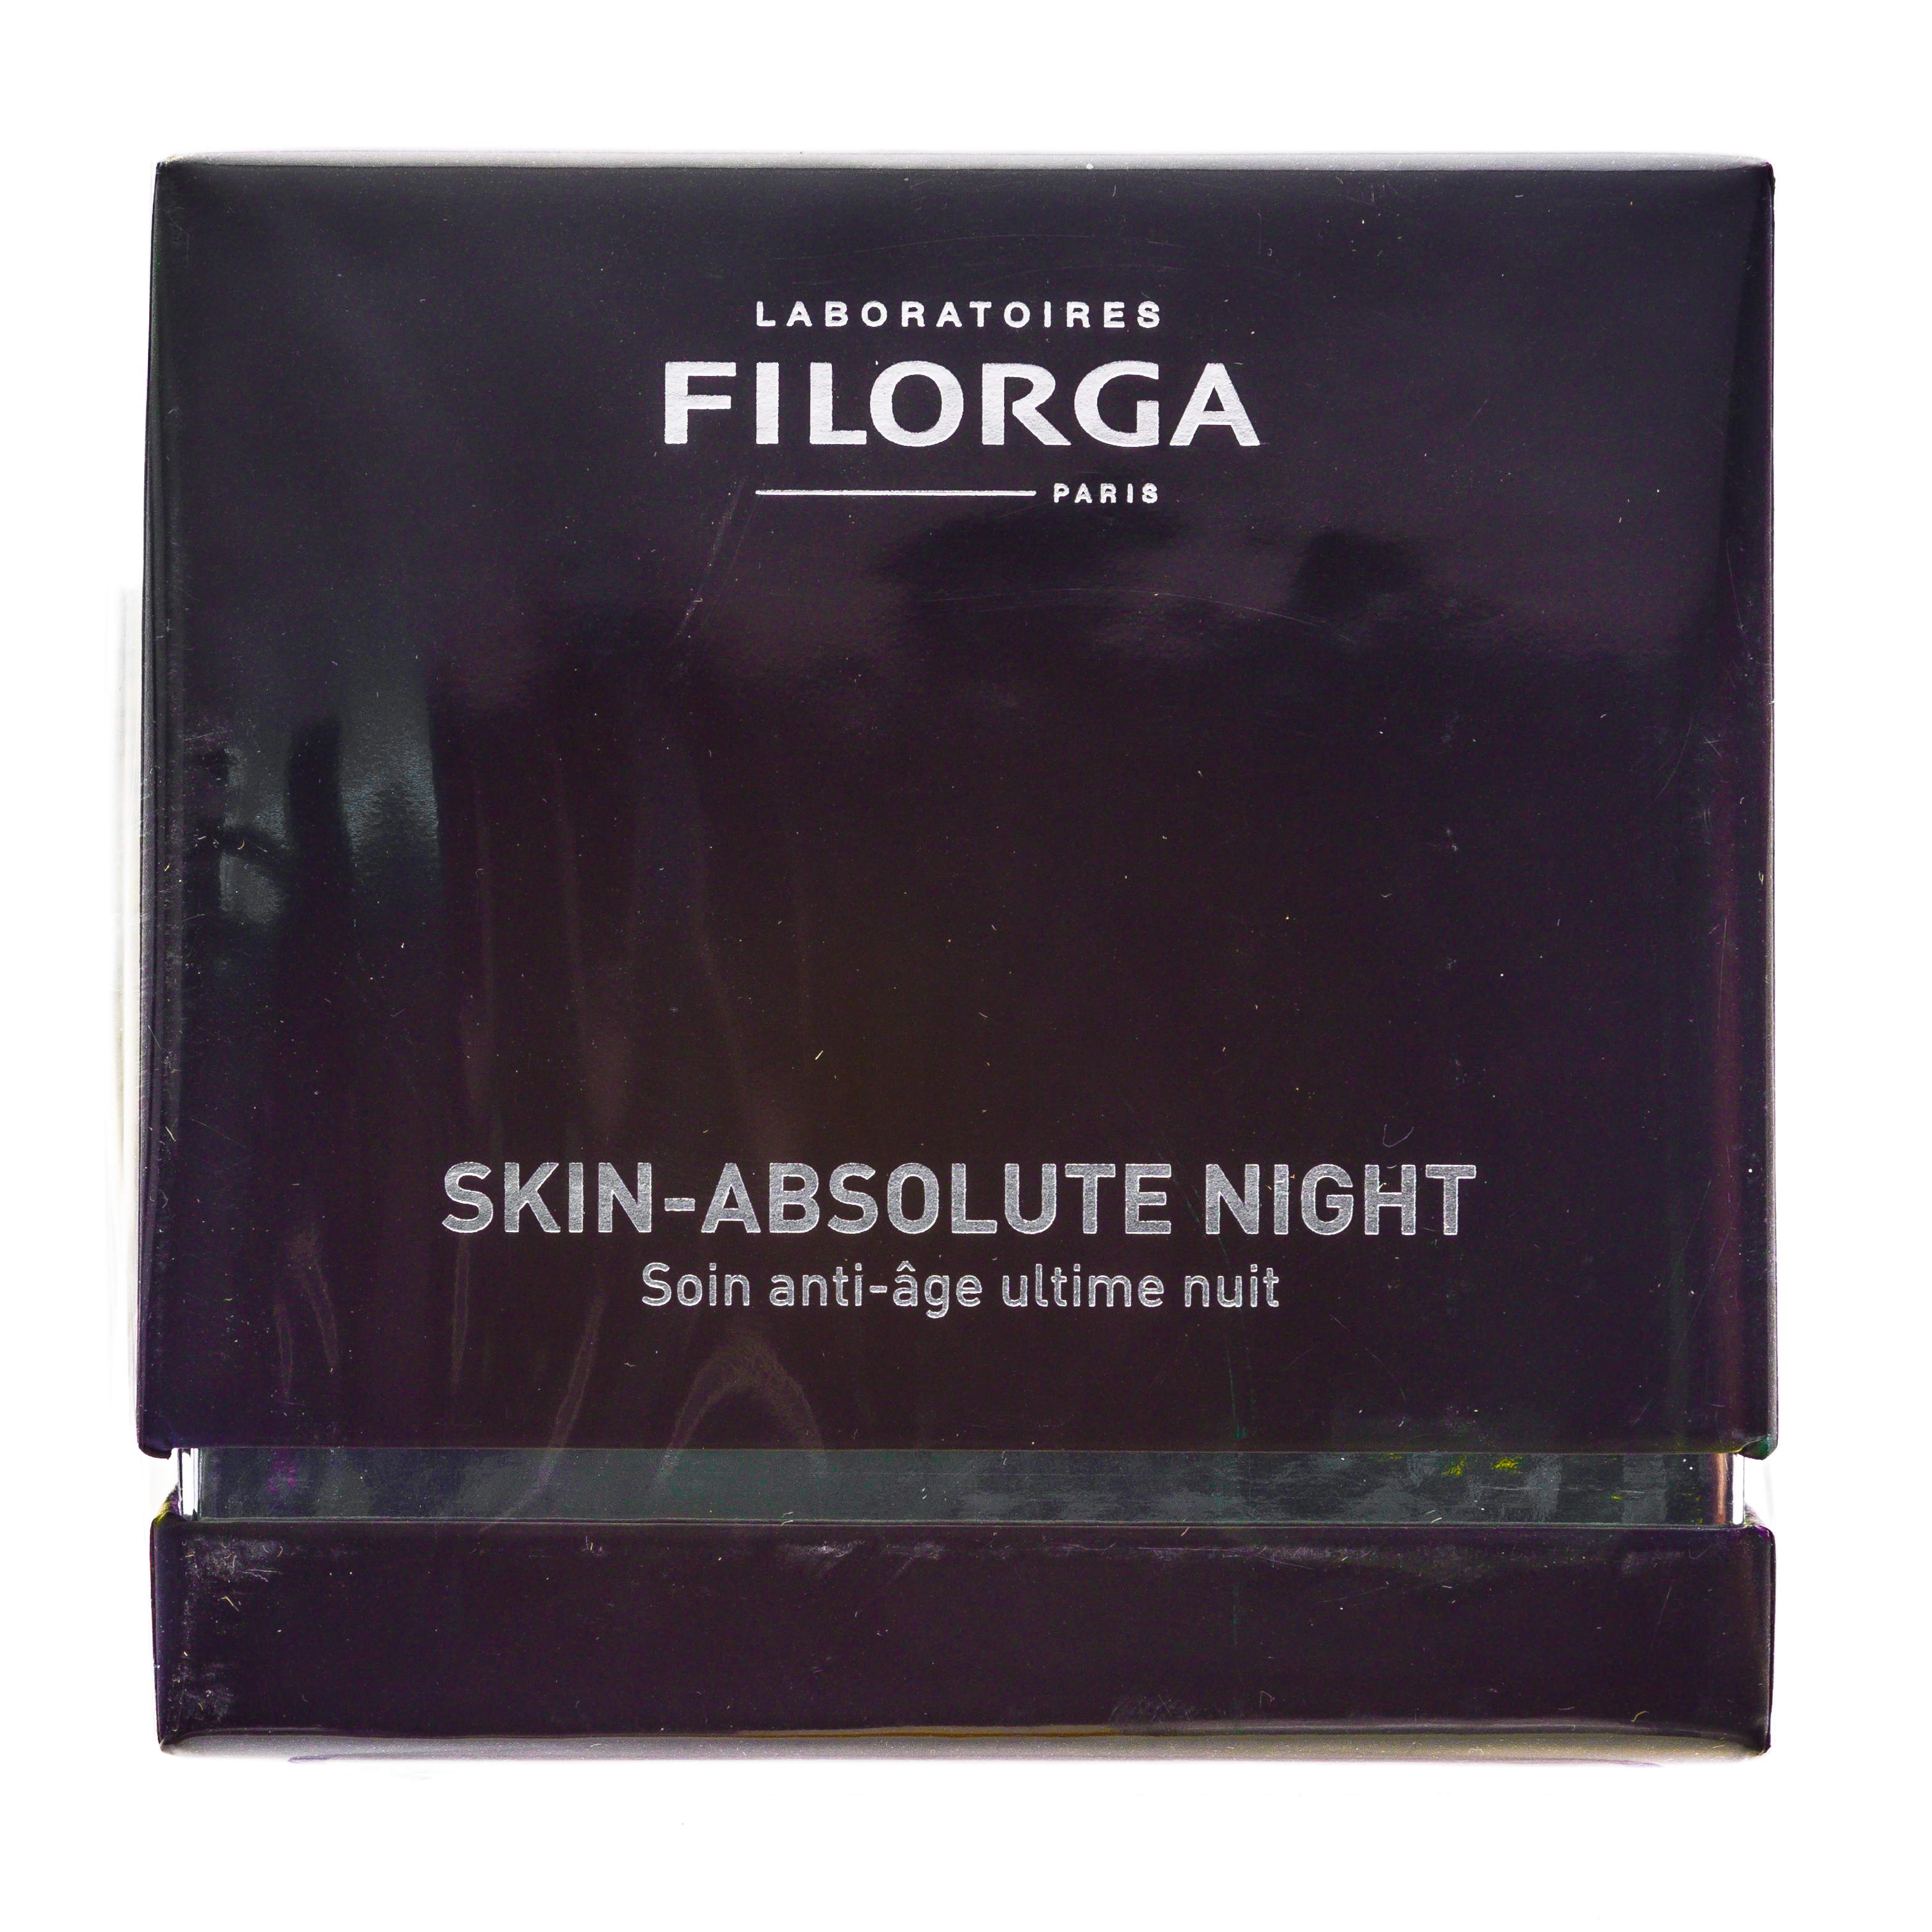 Filorga Skin-Absolute Ночной крем Скин-Абсолют 50 мл (Filorg